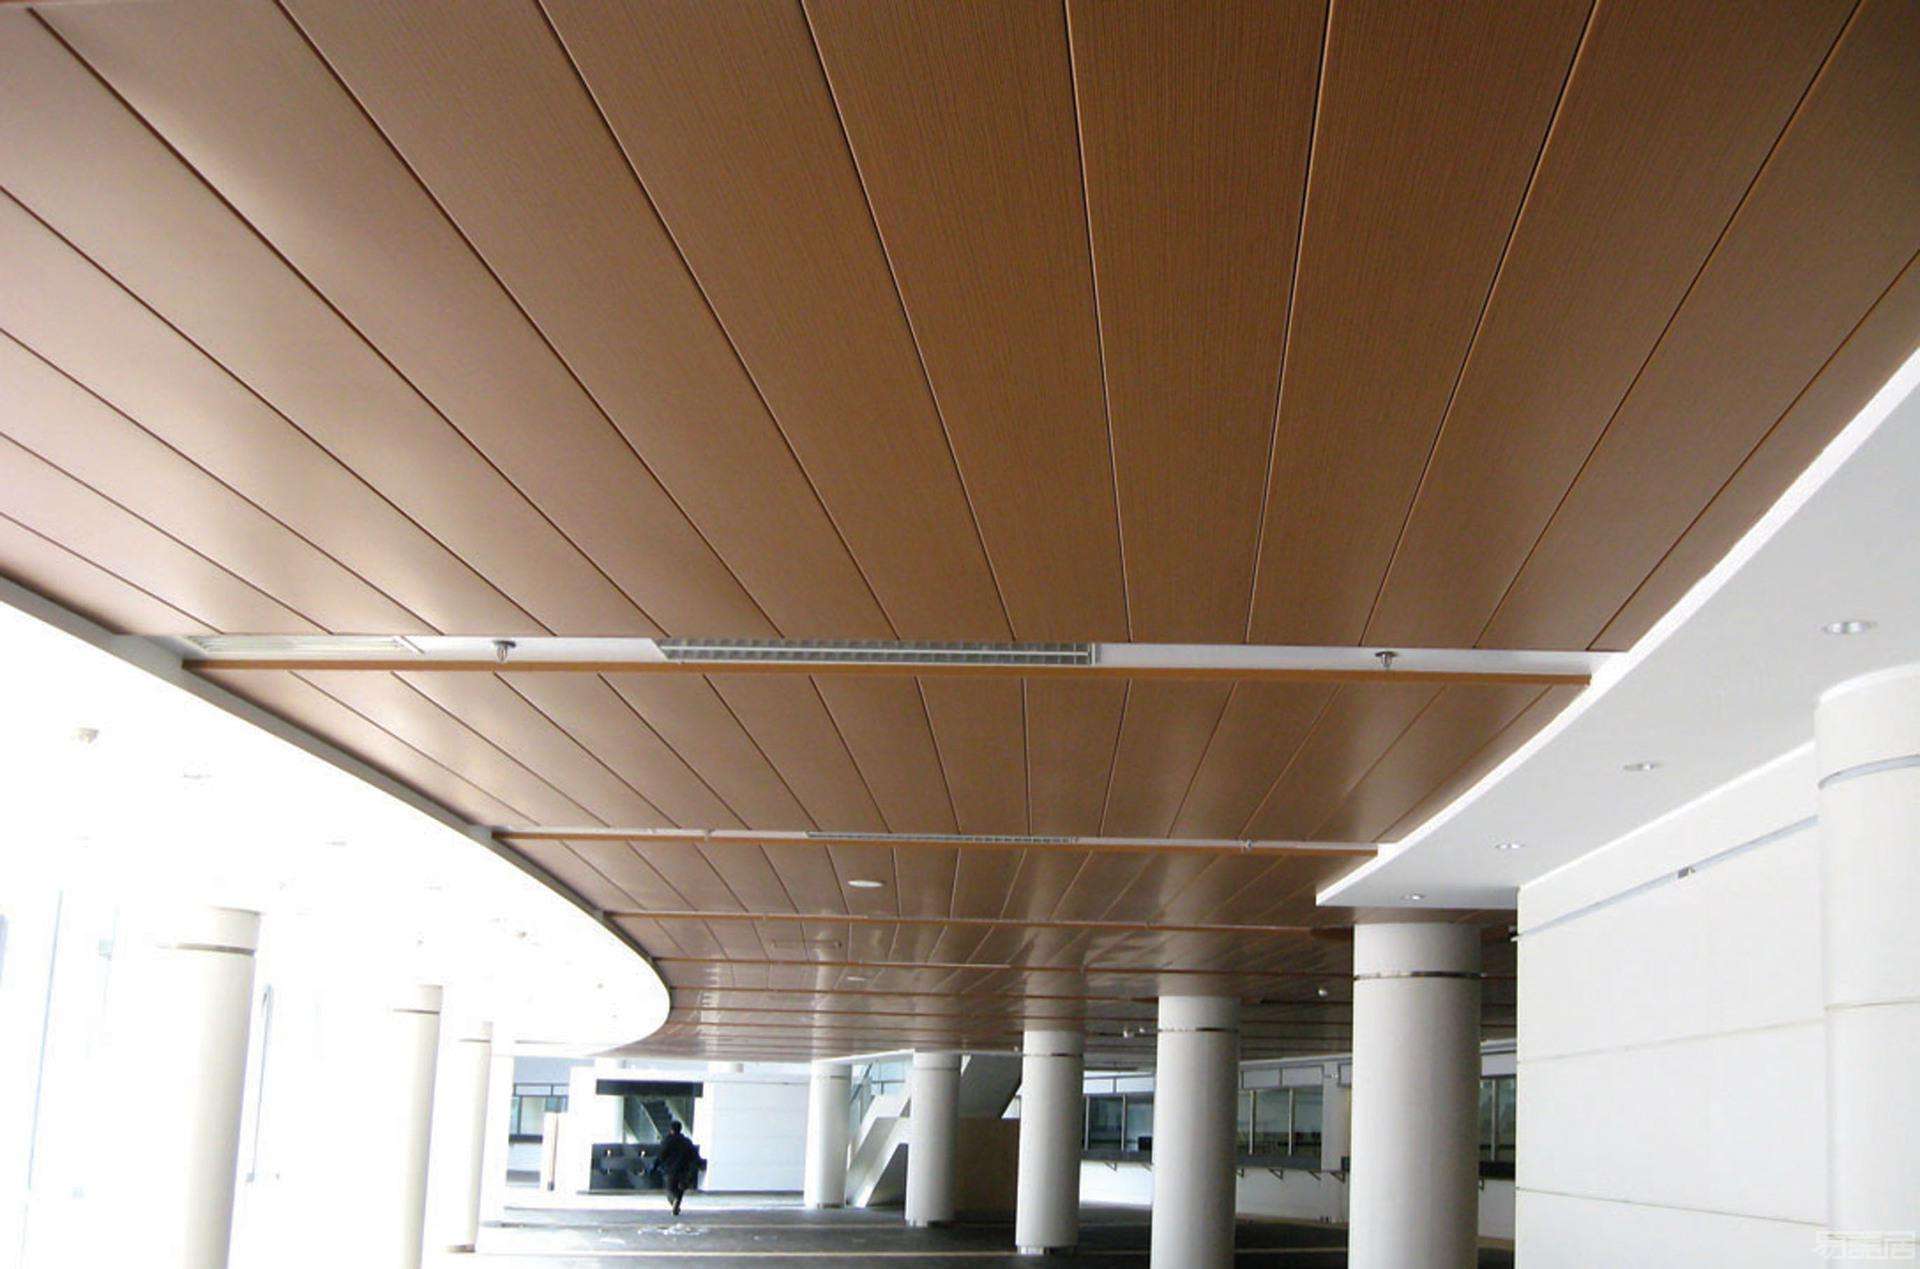 吊顶 | Ceiling——铝扣板 | Aluminous gusset plate,吊顶,铝扣板